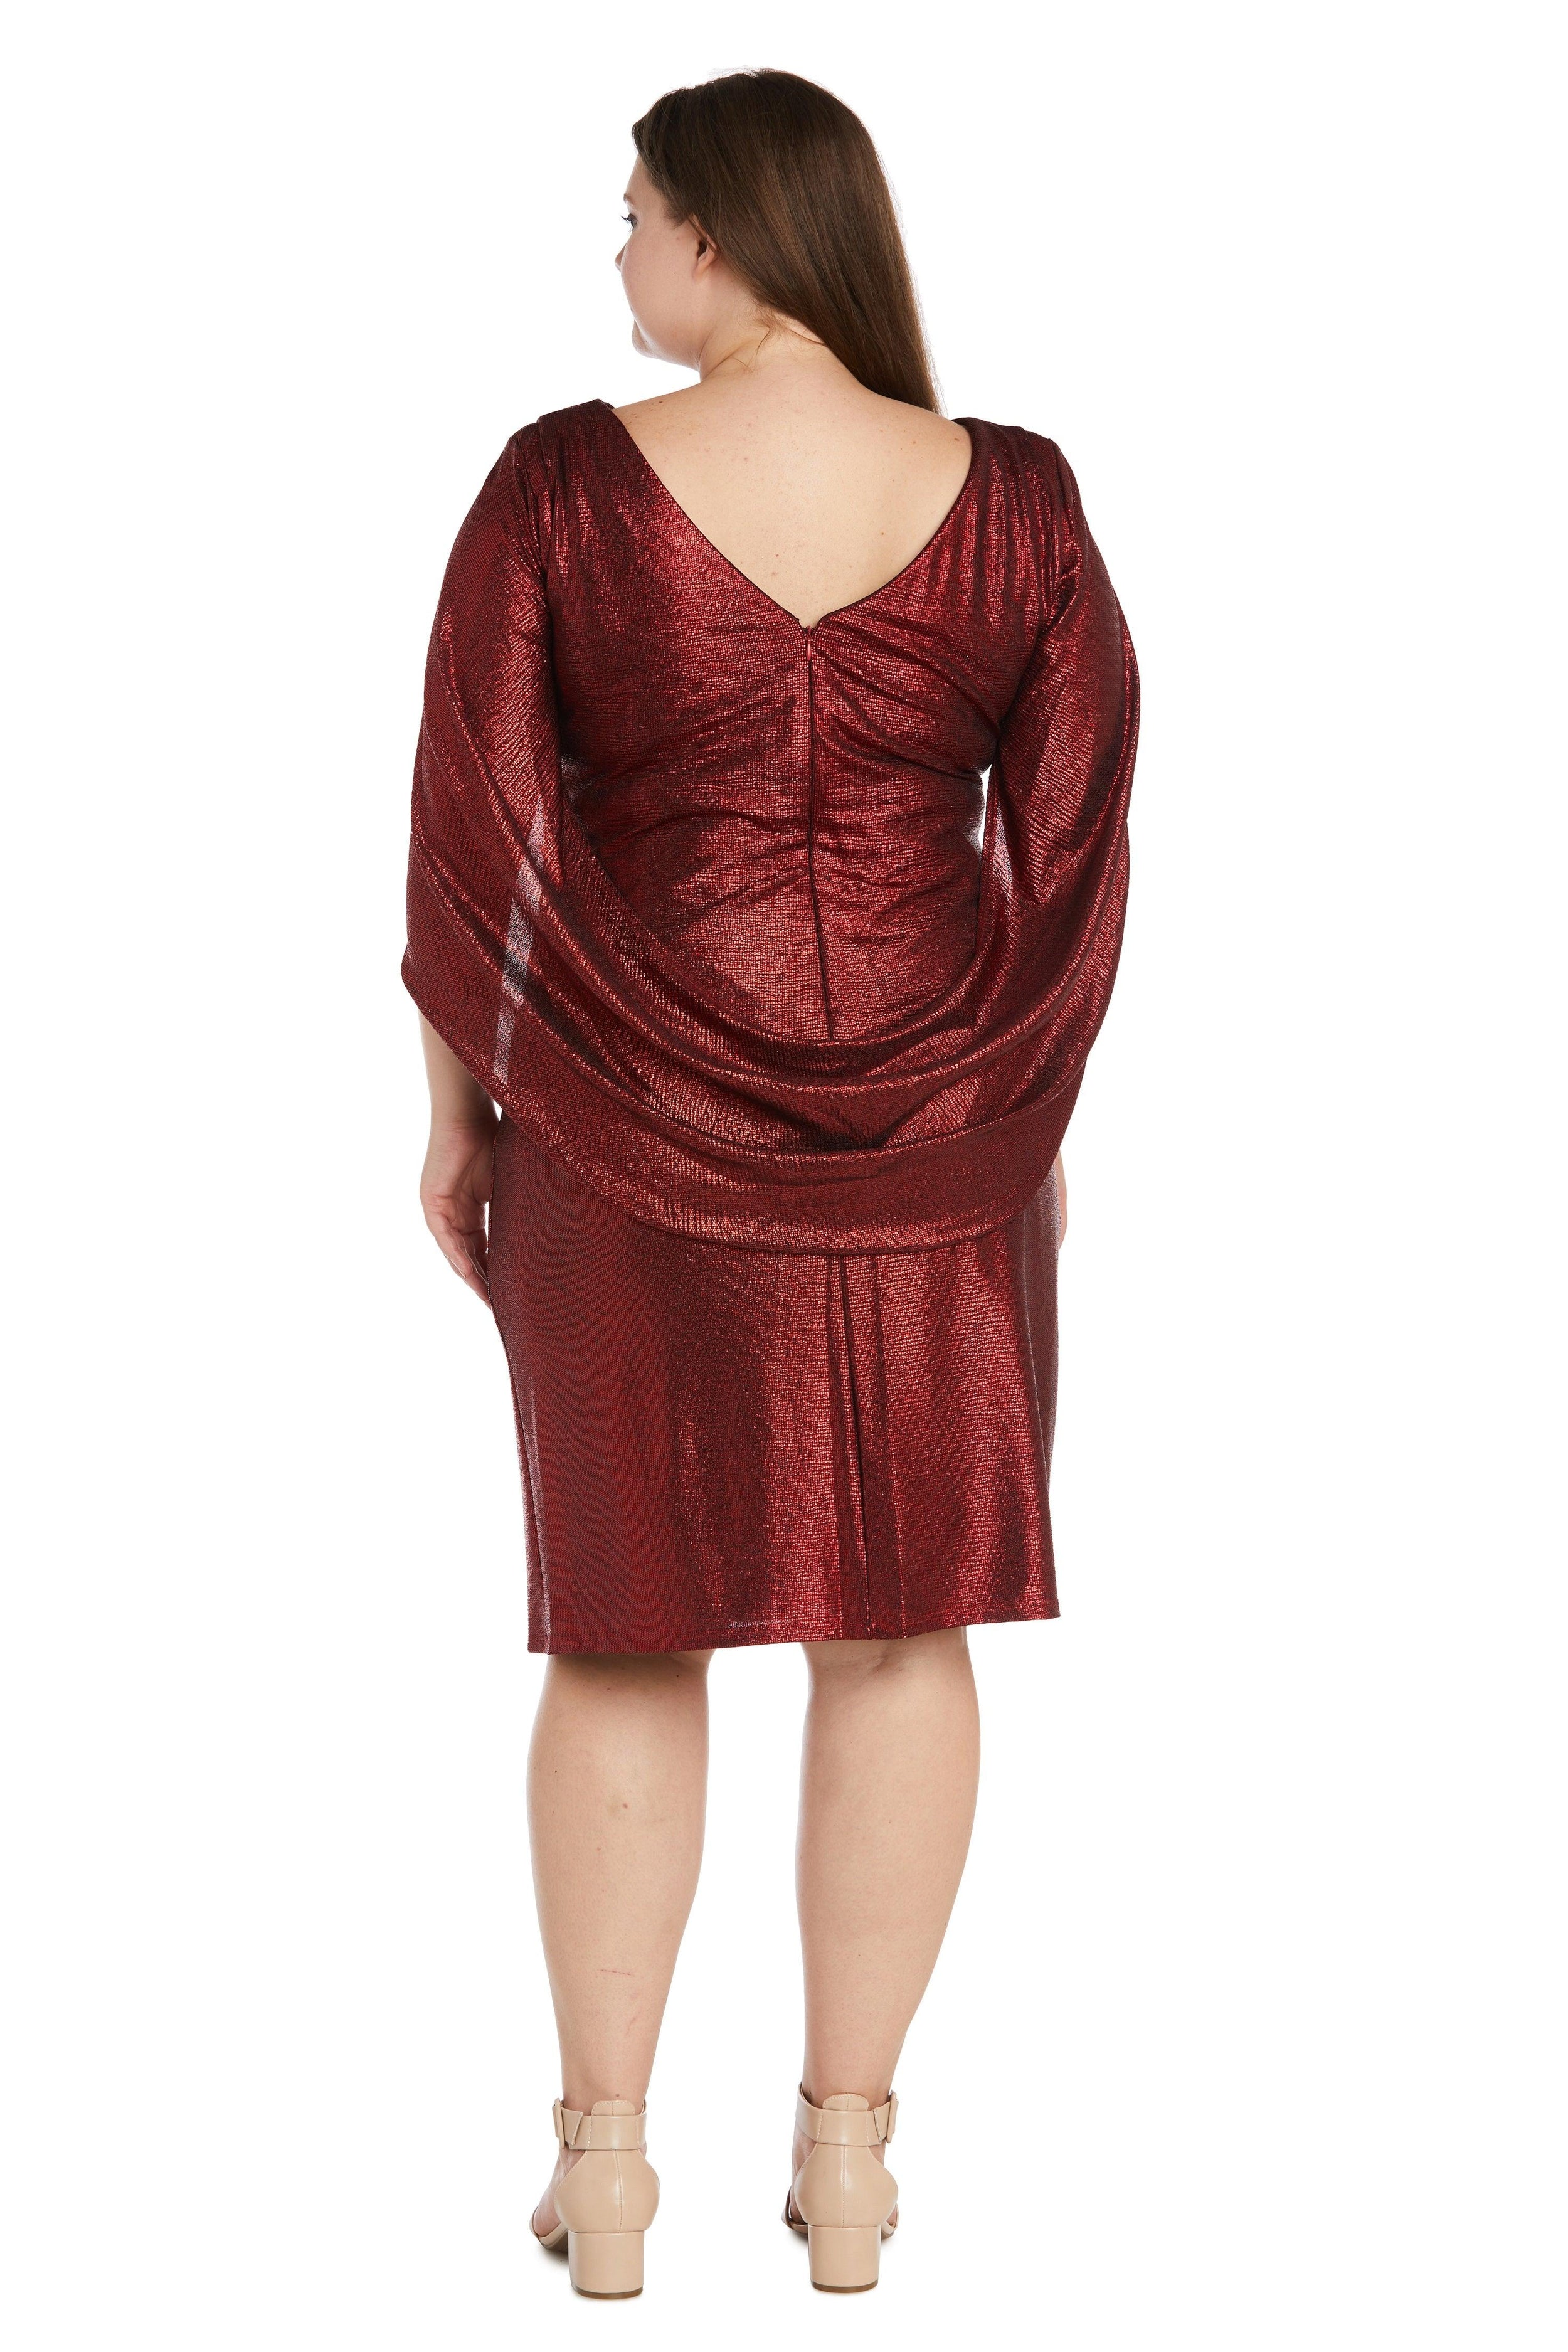 R&M Richards Draped Sleeve Short Plus Size Dress 7441W - The Dress Outlet